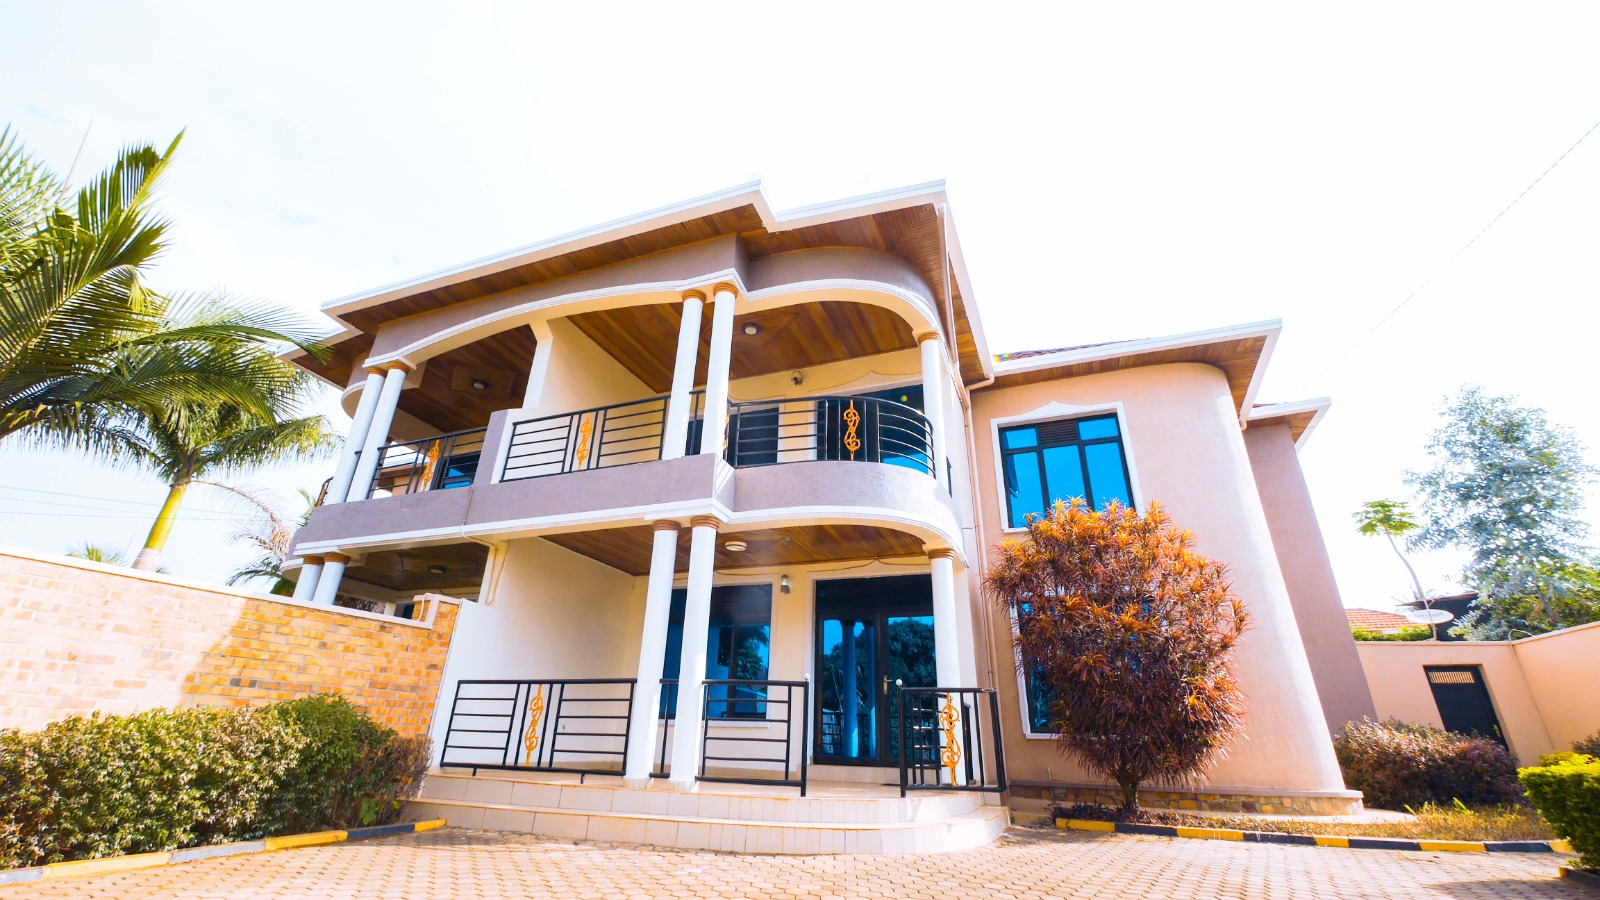 V172 Gacuriro very nice Full furnished house for rent in Kigali Rwanda